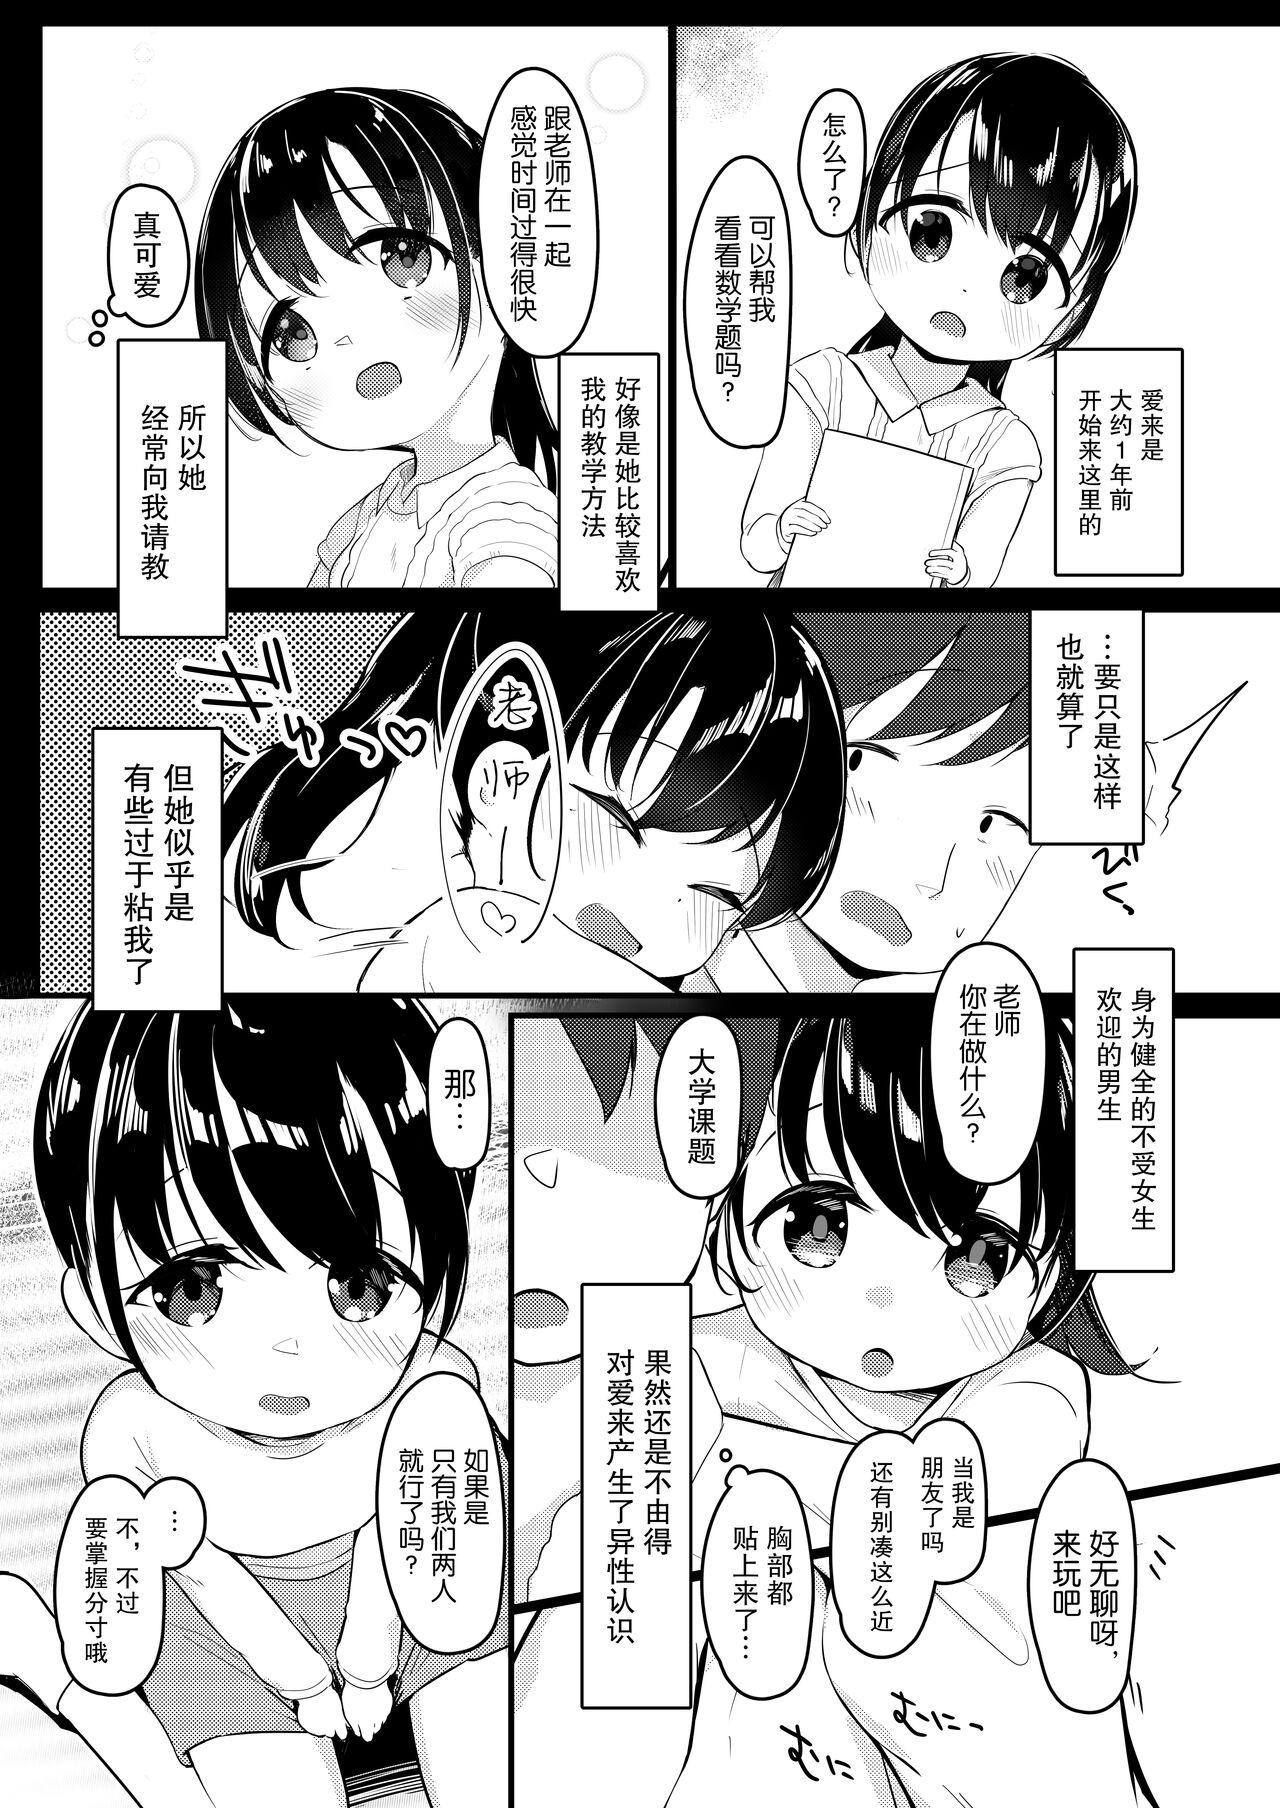 Reversecowgirl Watashi ga Kanojo ja Dame desu ka? 2 - Original Scandal - Page 5